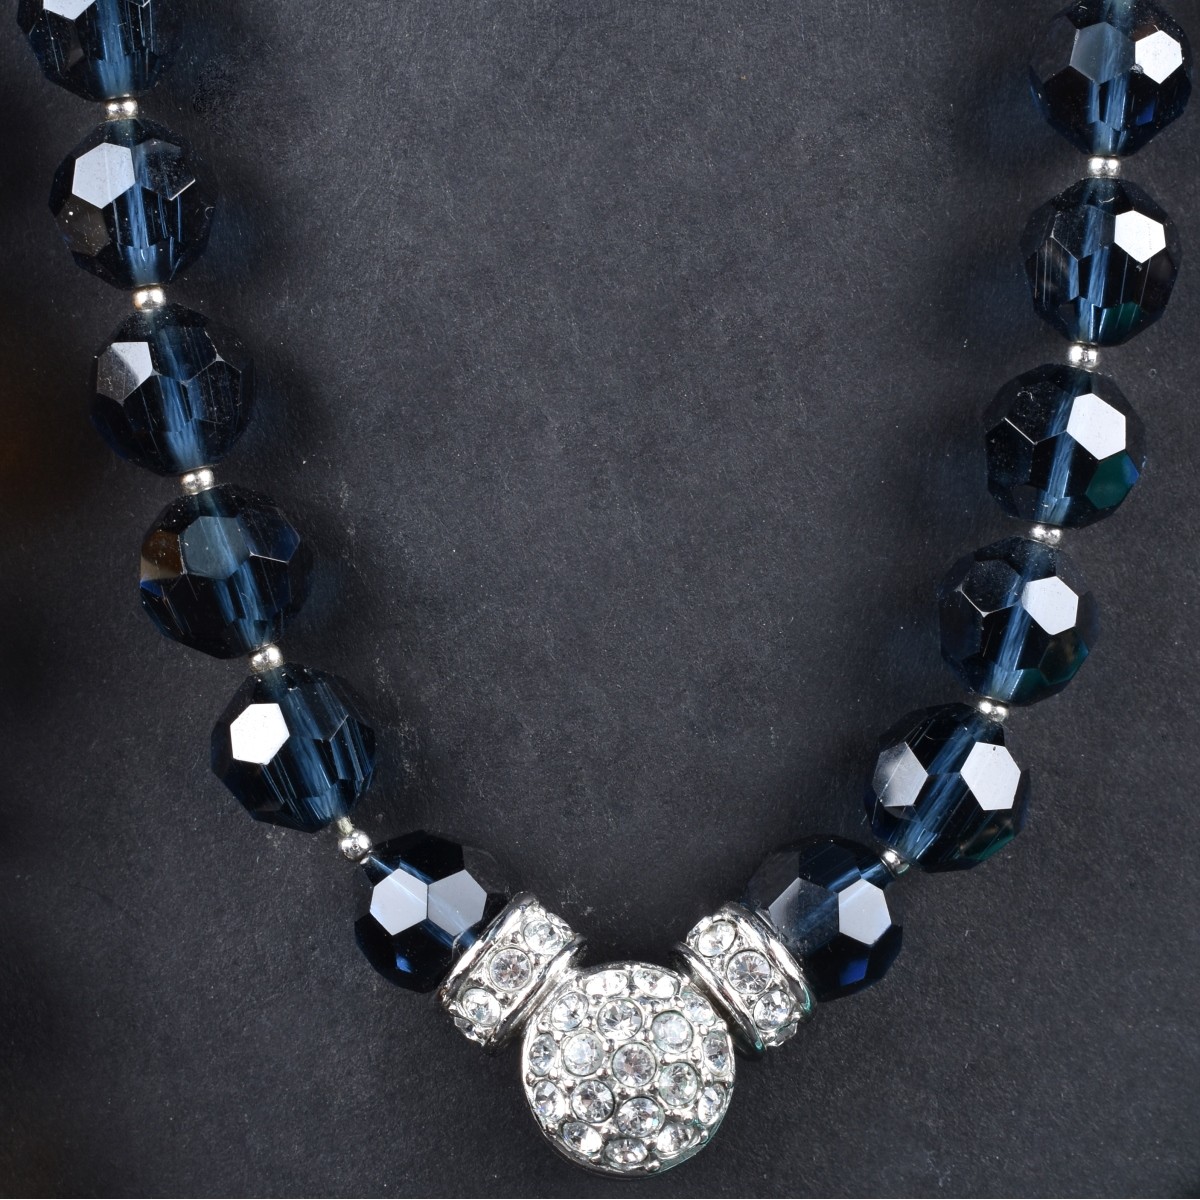 8 Designer Costume Jewelry Necklaces